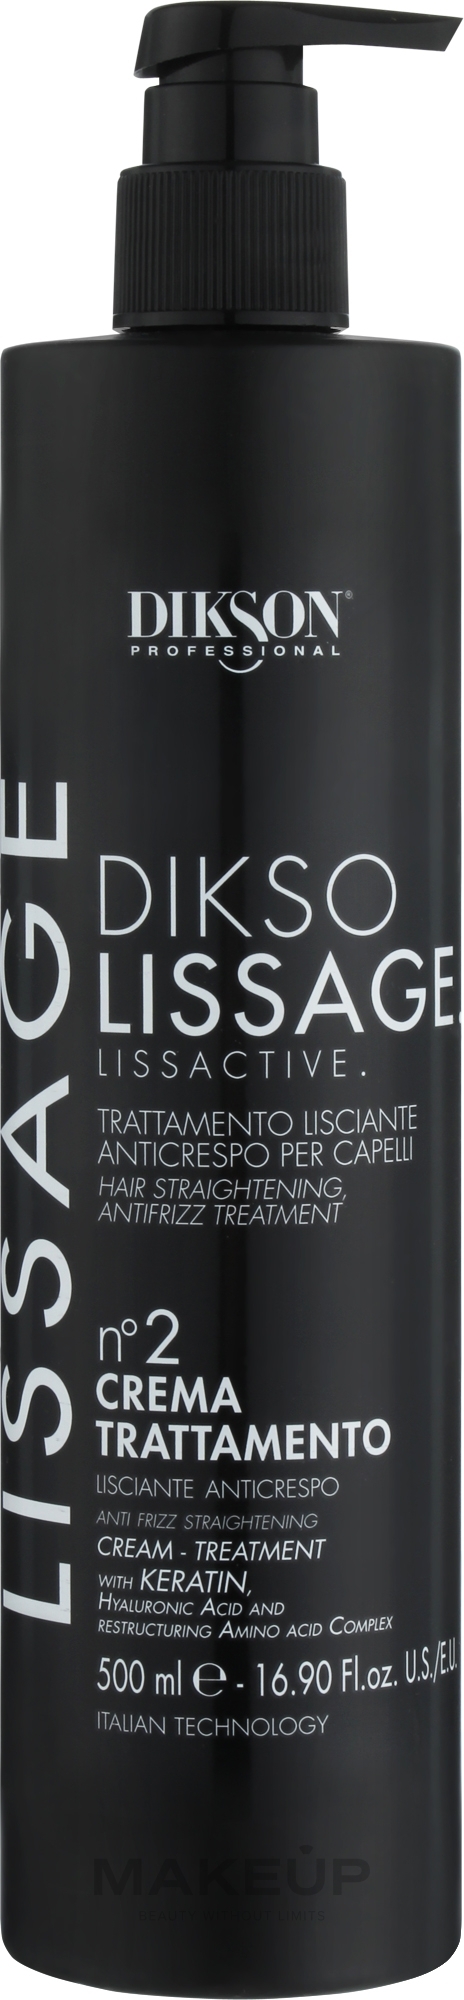 Разглаживающий восстанавливающий крем для волос №2 - Dikson Diksolissage Lissactive Hair Straightening Treatment Cream — фото 500ml